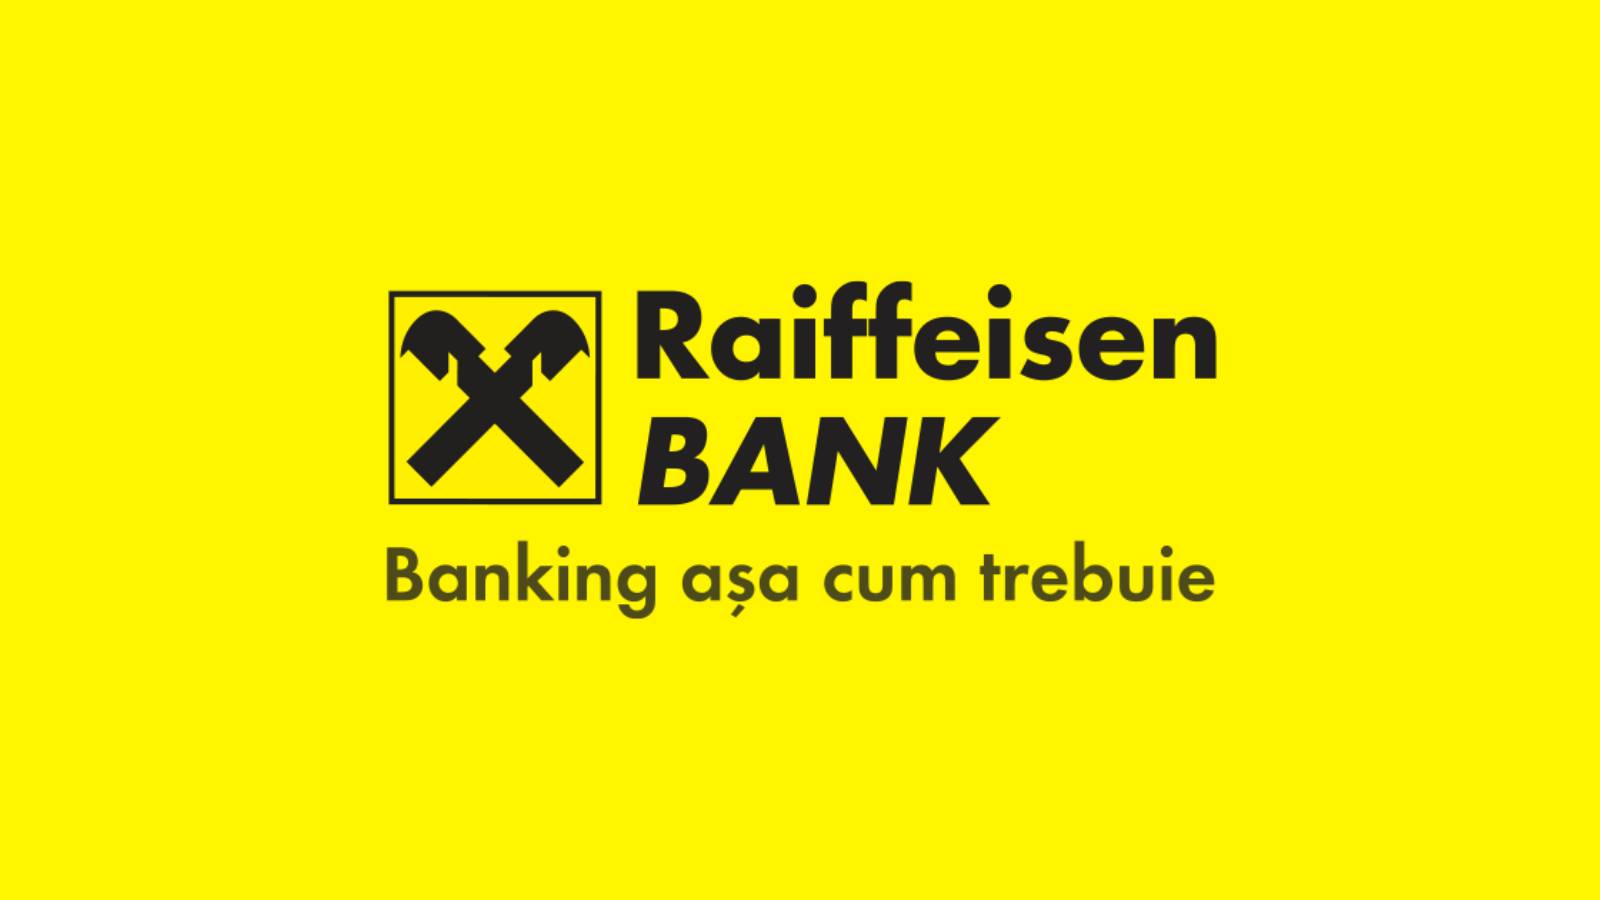 Prima del banco Raiffeisen